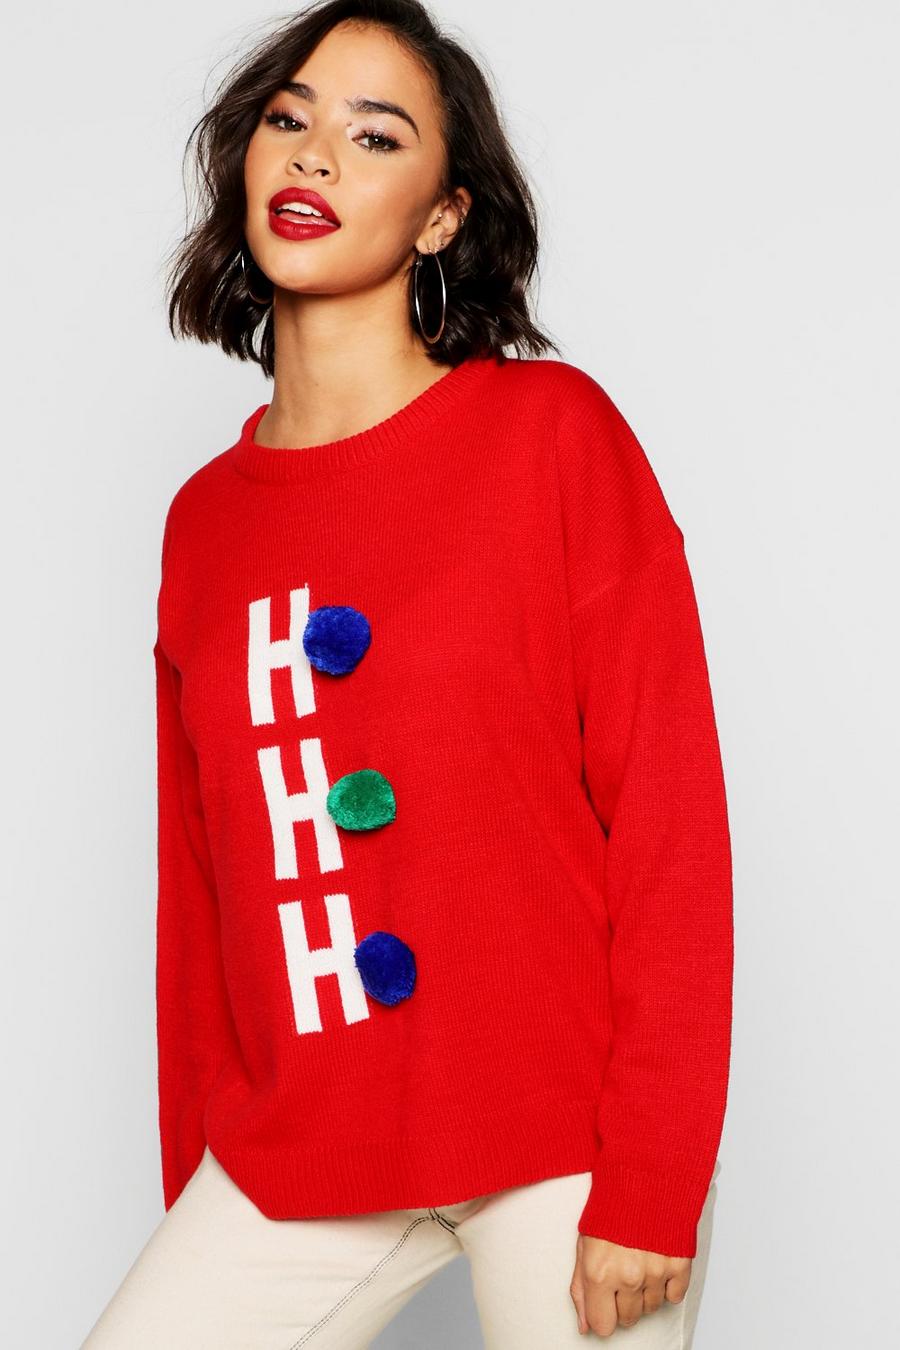 Fire red Hohoho Christmas Sweater With Pom Pom image number 1